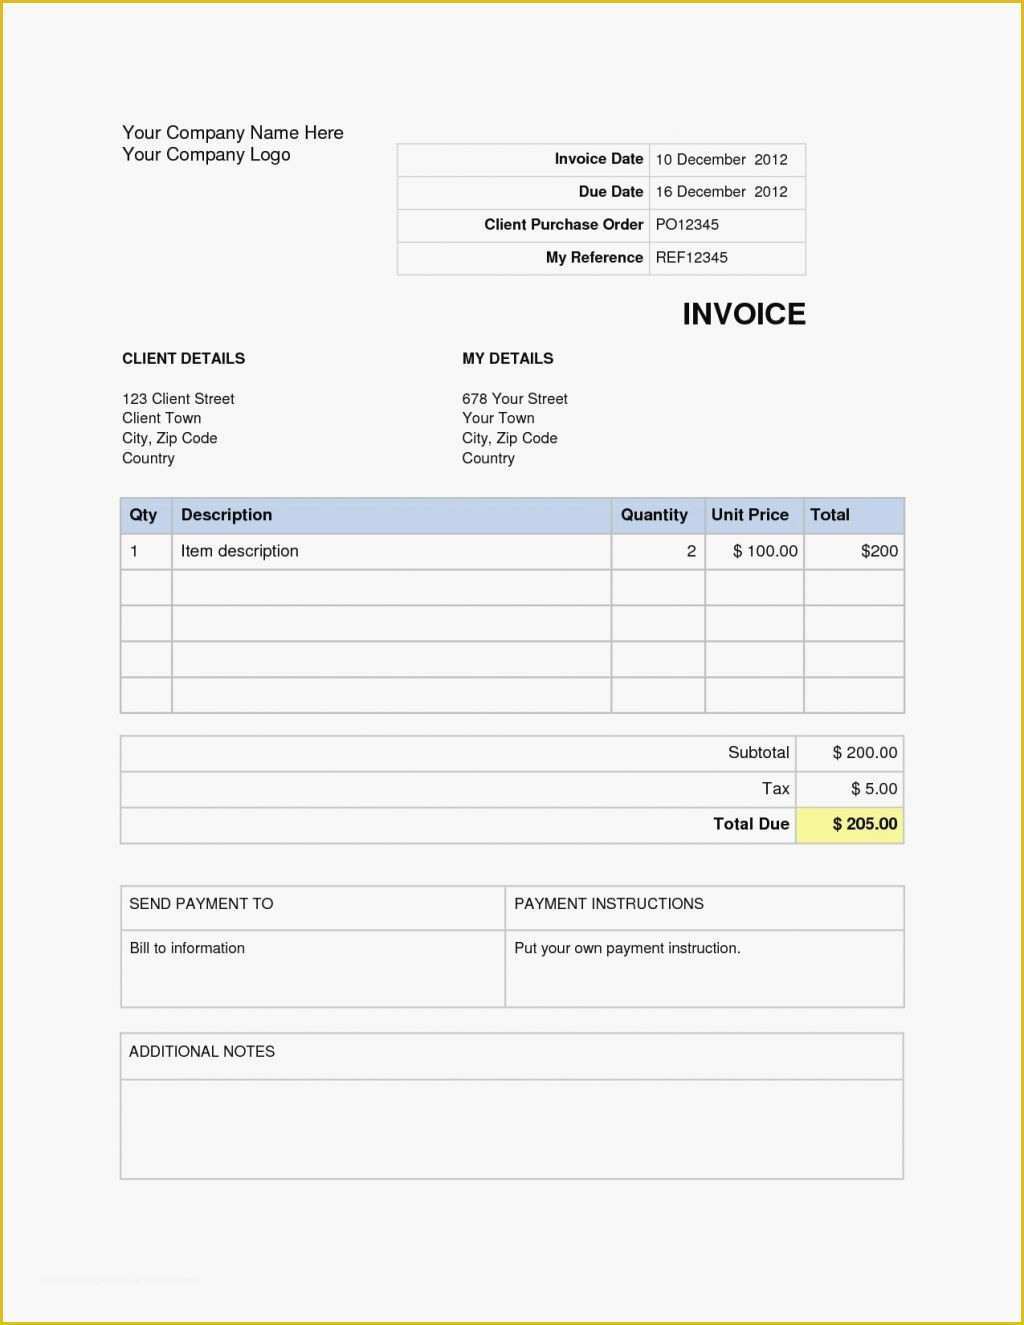 Free Invoice Template Google Docs Of Invoice Templates Google Docs Invoice Template Ideas